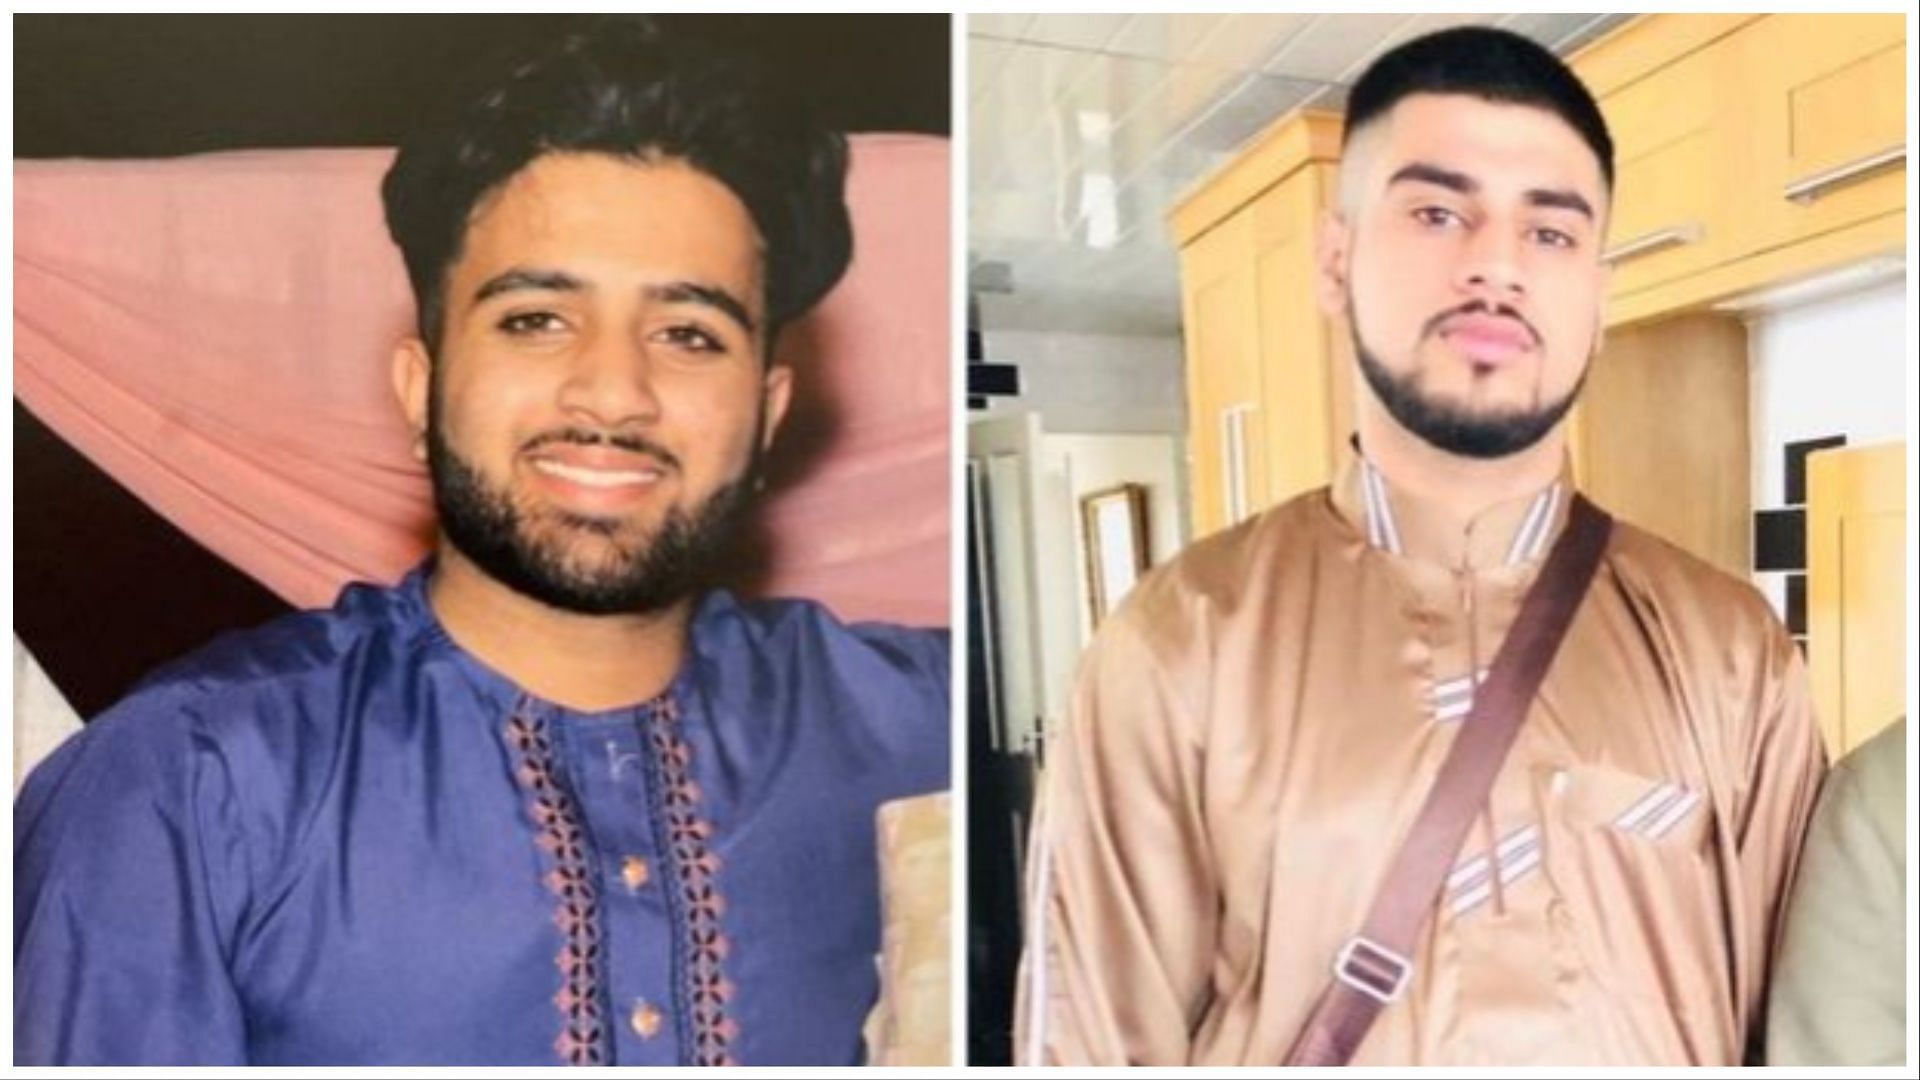 Mohammed Hashim Ijazuddin (left) and Saquib Hussain (right). (Image via Leicestershire Police)